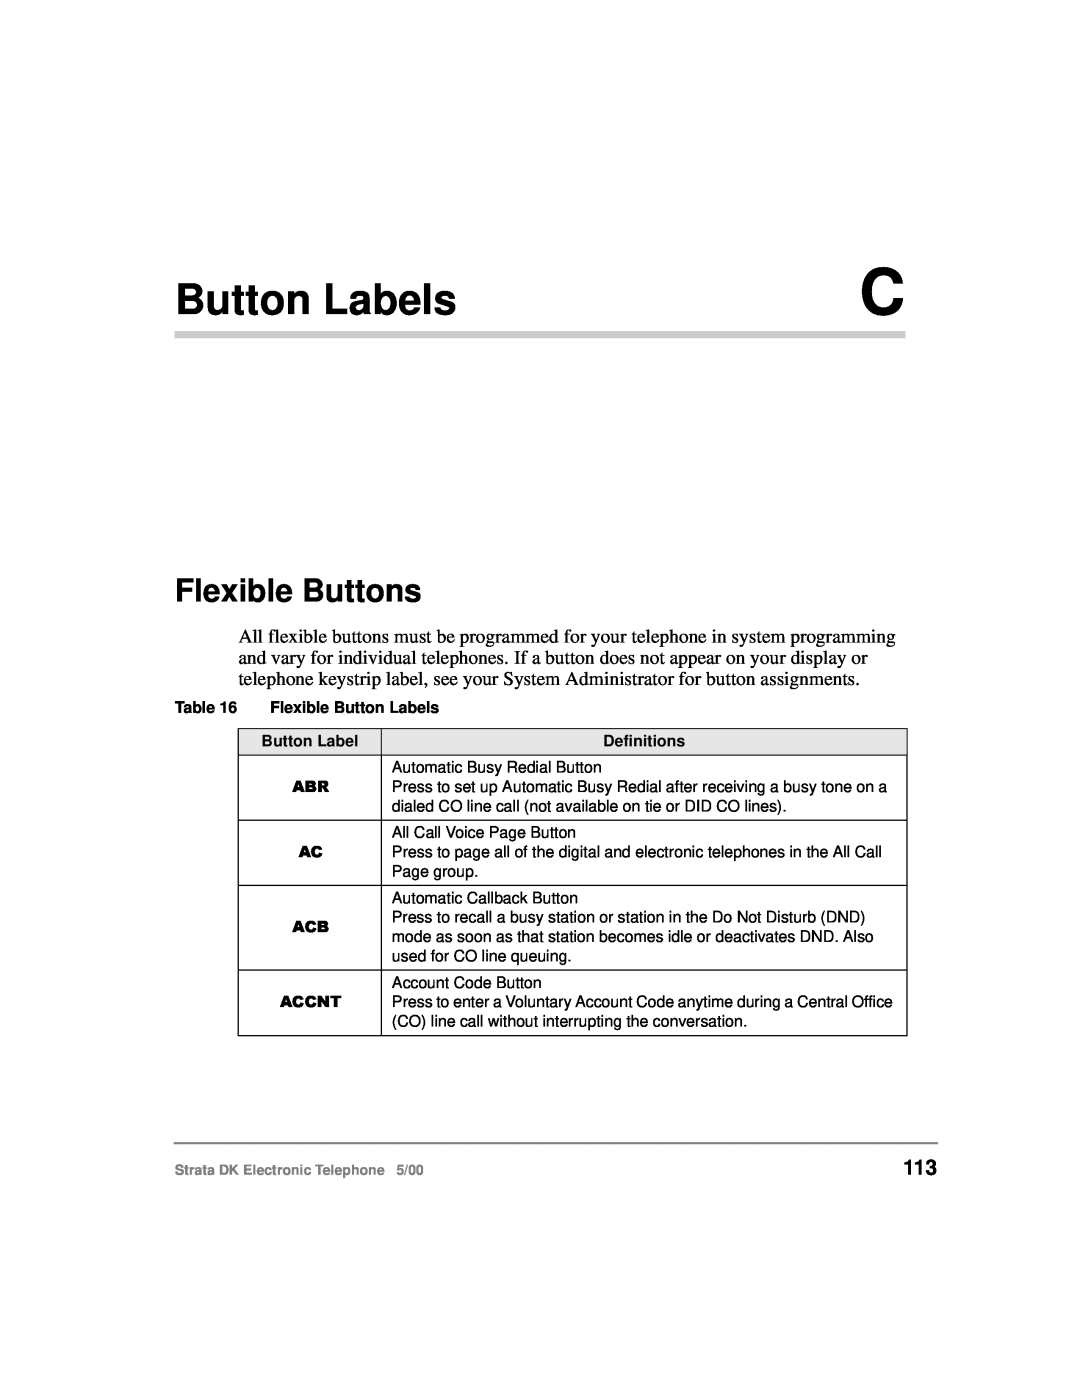 Toshiba Strata DK manual Button Labels, Flexible Buttons, $&&17 